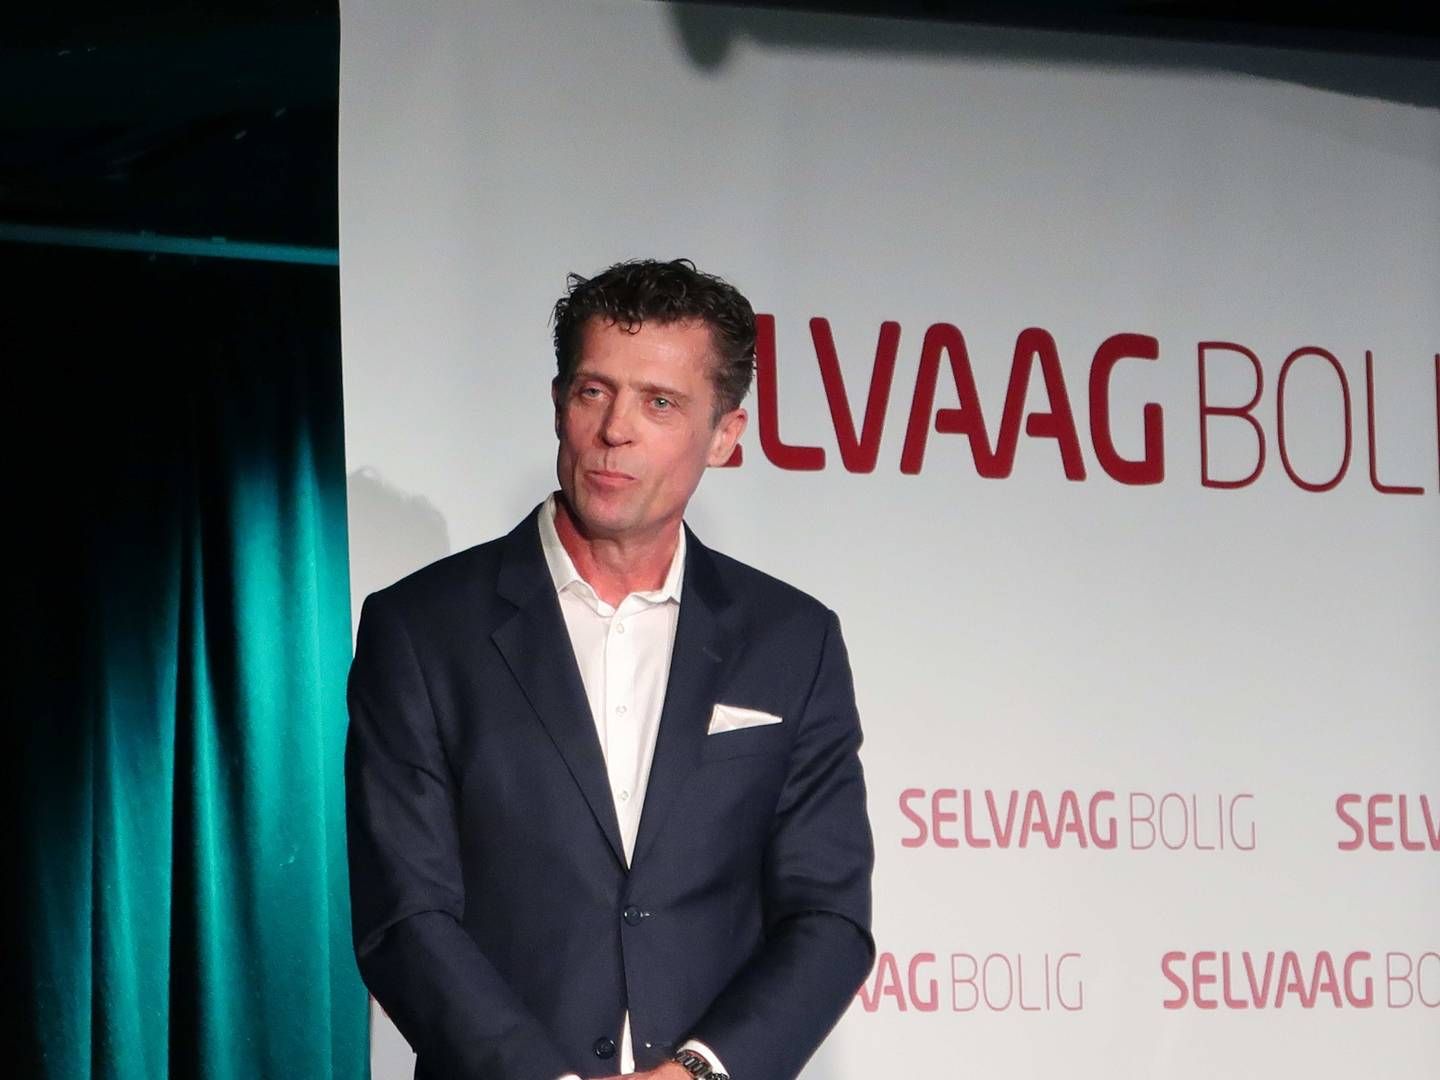 PÅ BOLIGKONFERANSE: Selvaag Bolig-sjefen Sverre Molvik på scenen onsdag. | Foto: Øystein Byberg